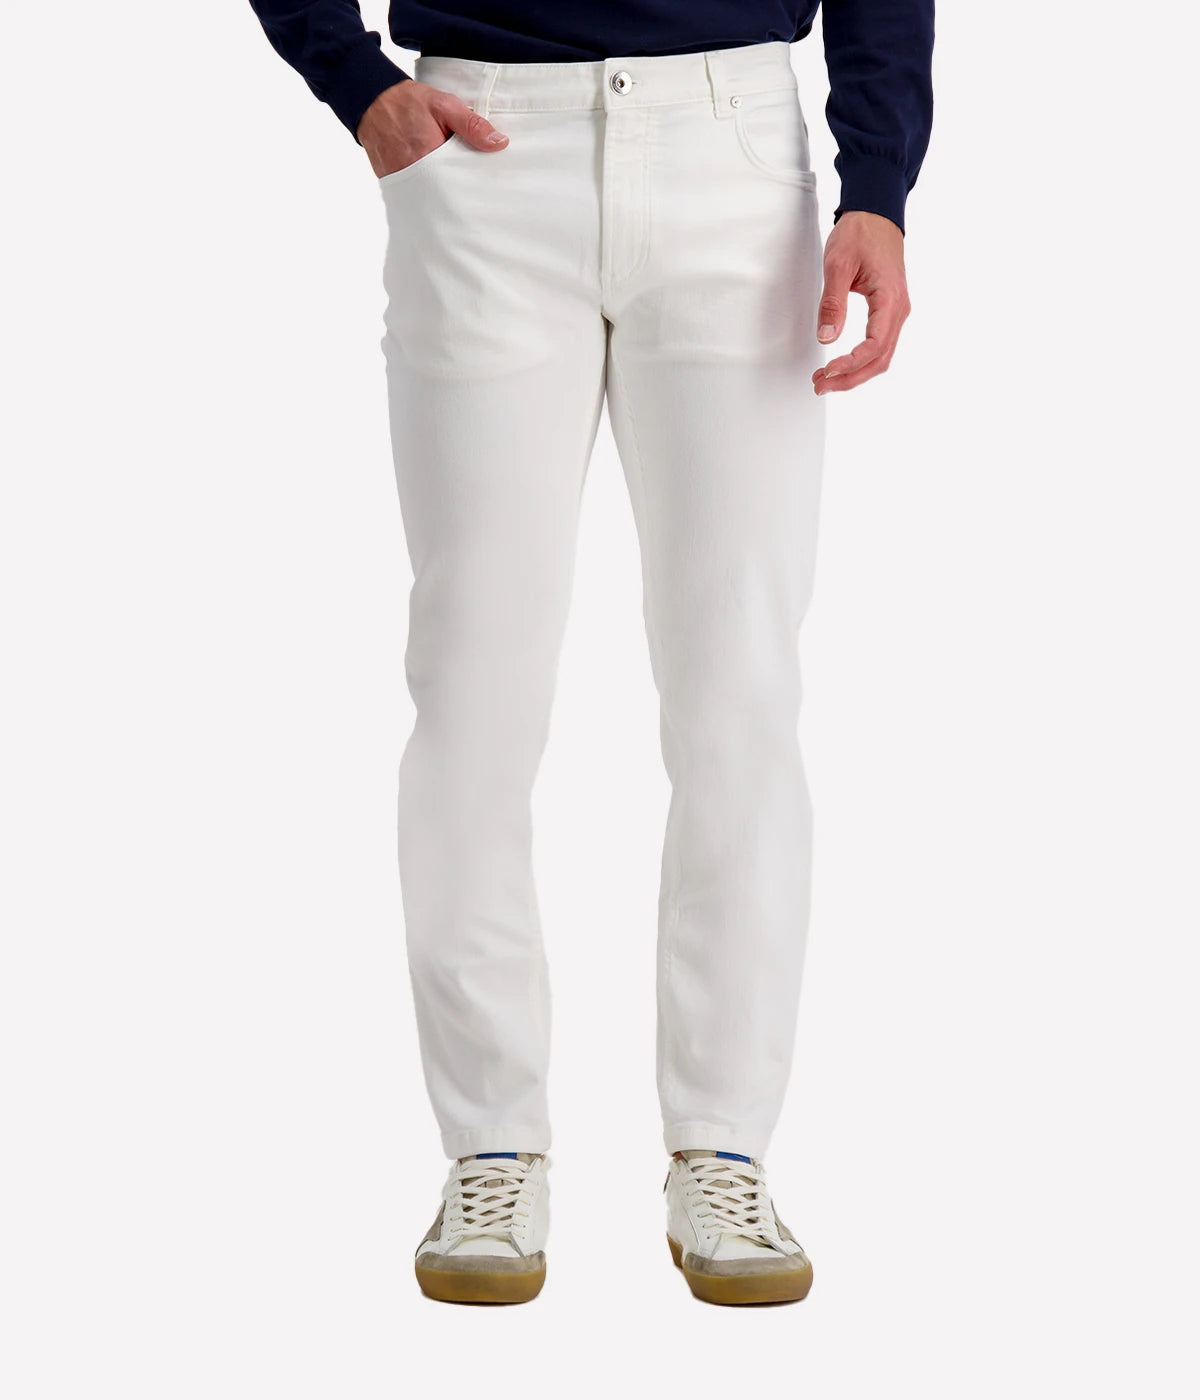 5 Pocket Pants in White